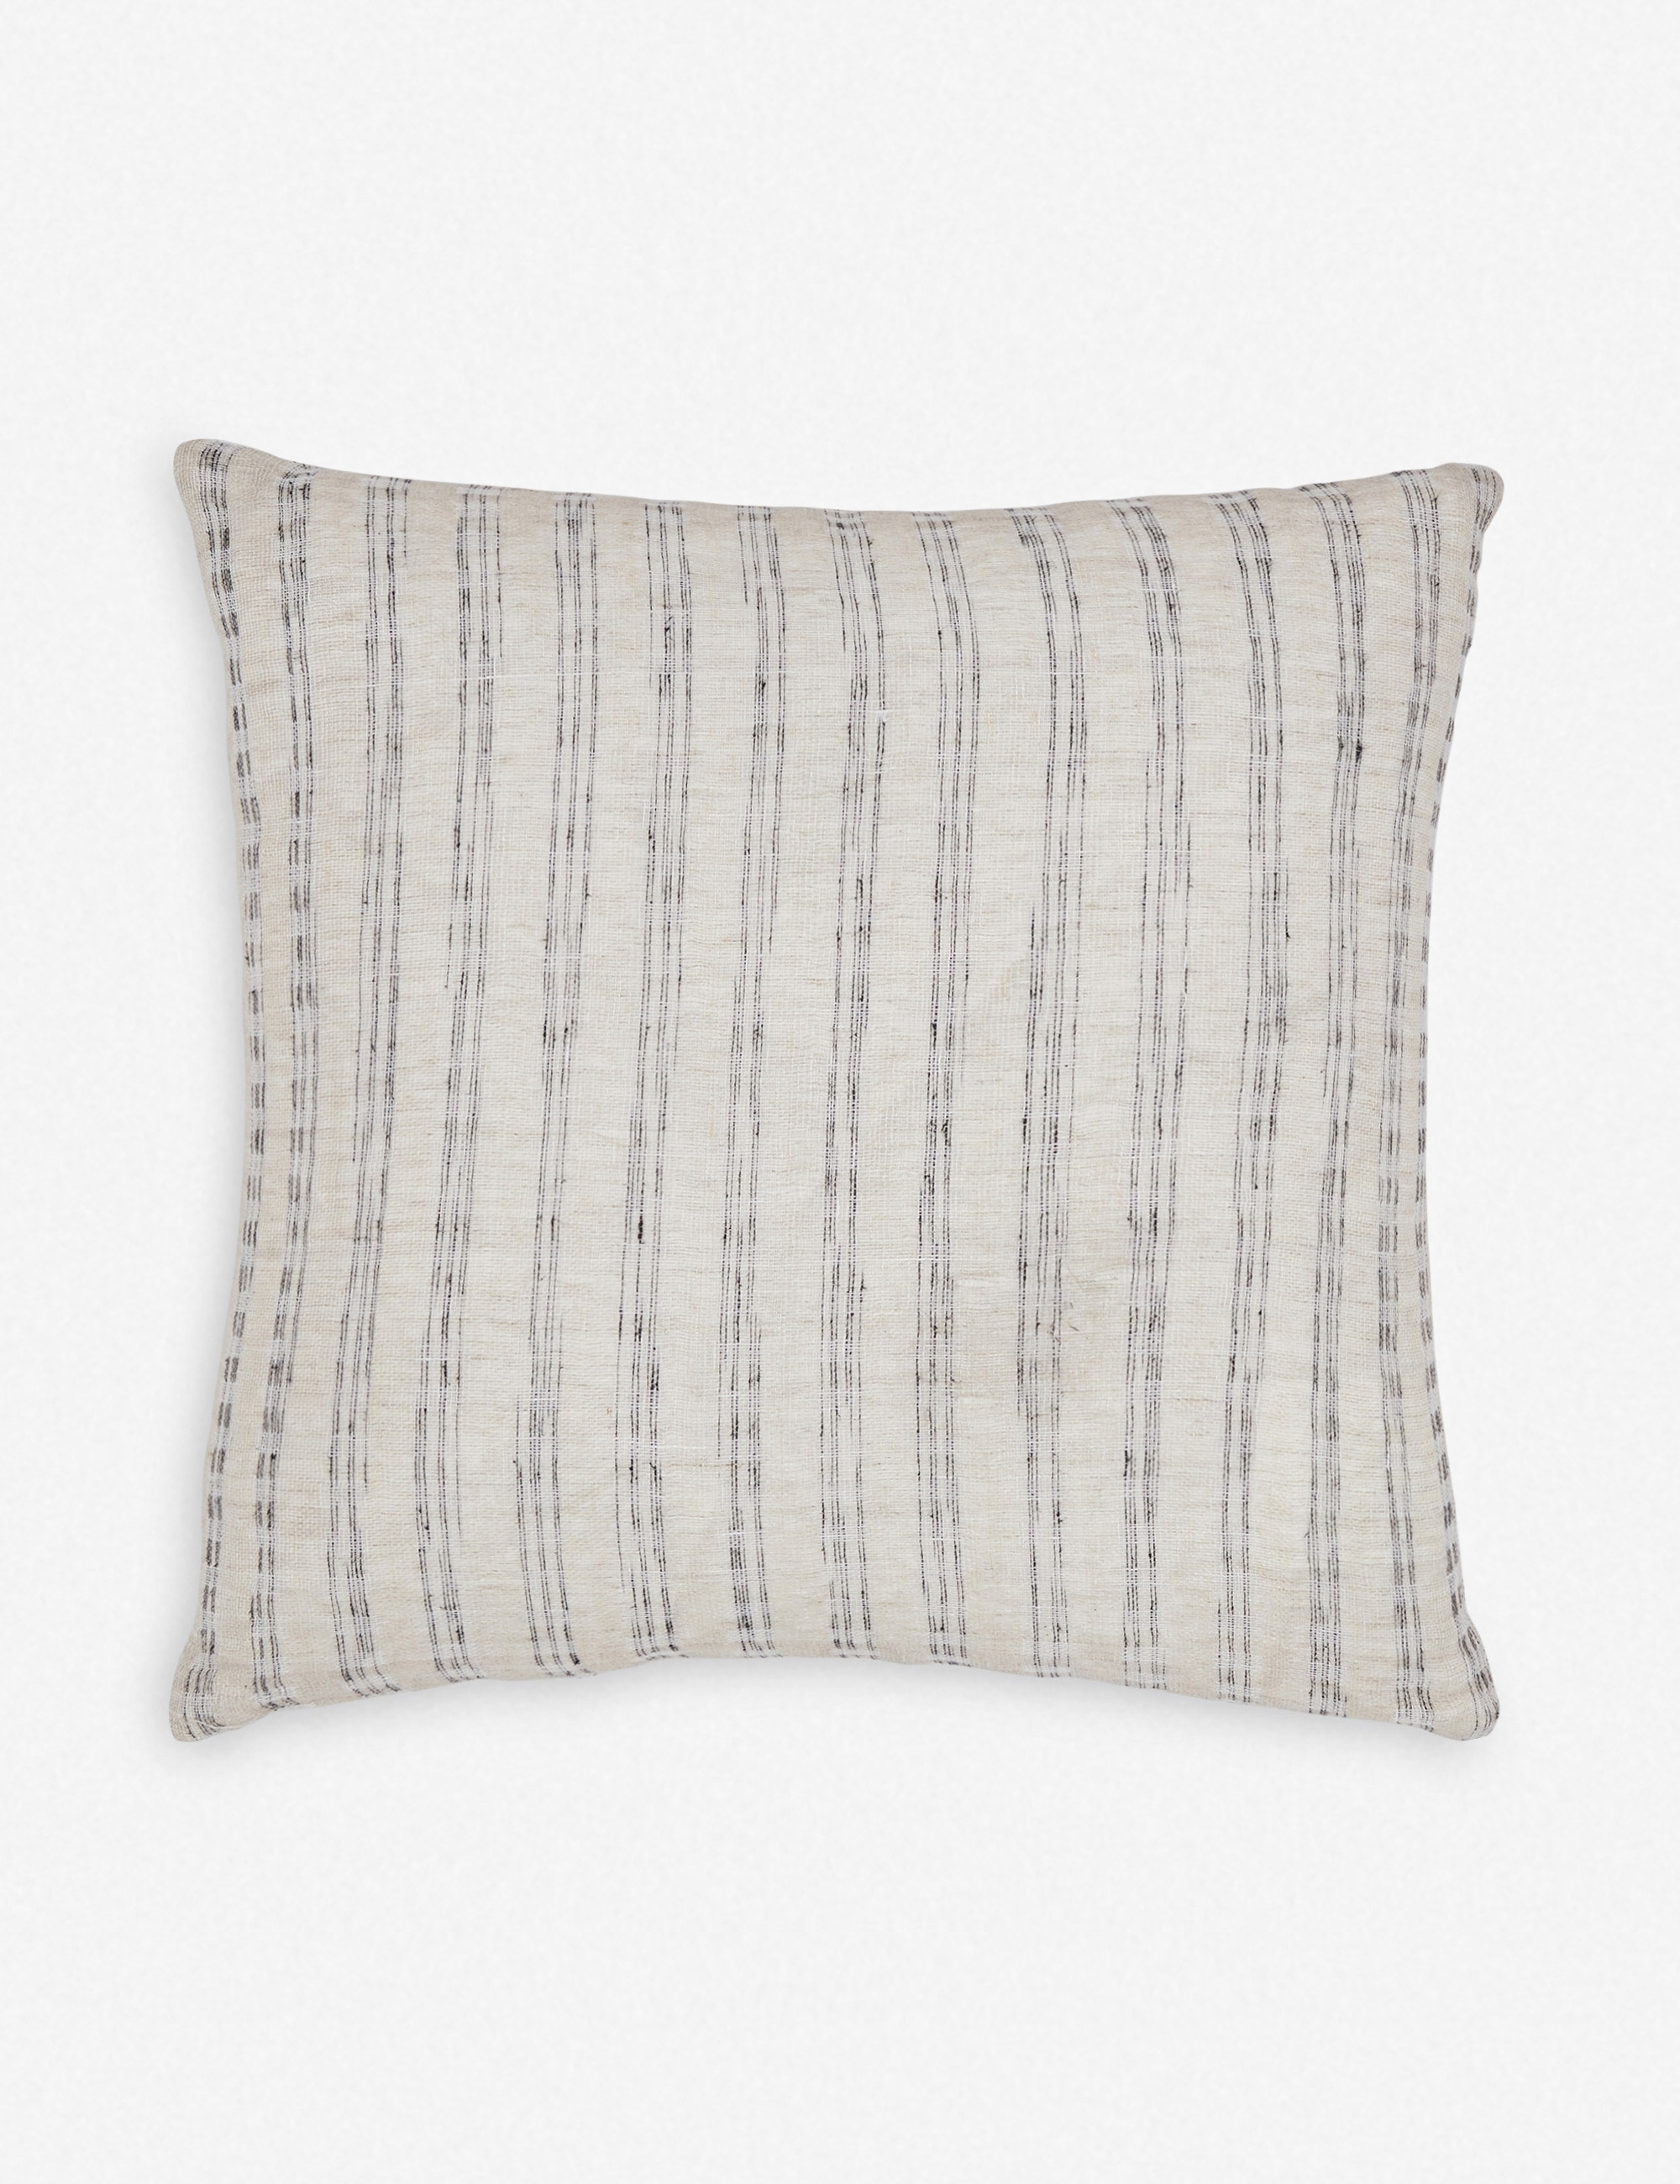 Vdara Linen Pillow - Image 0